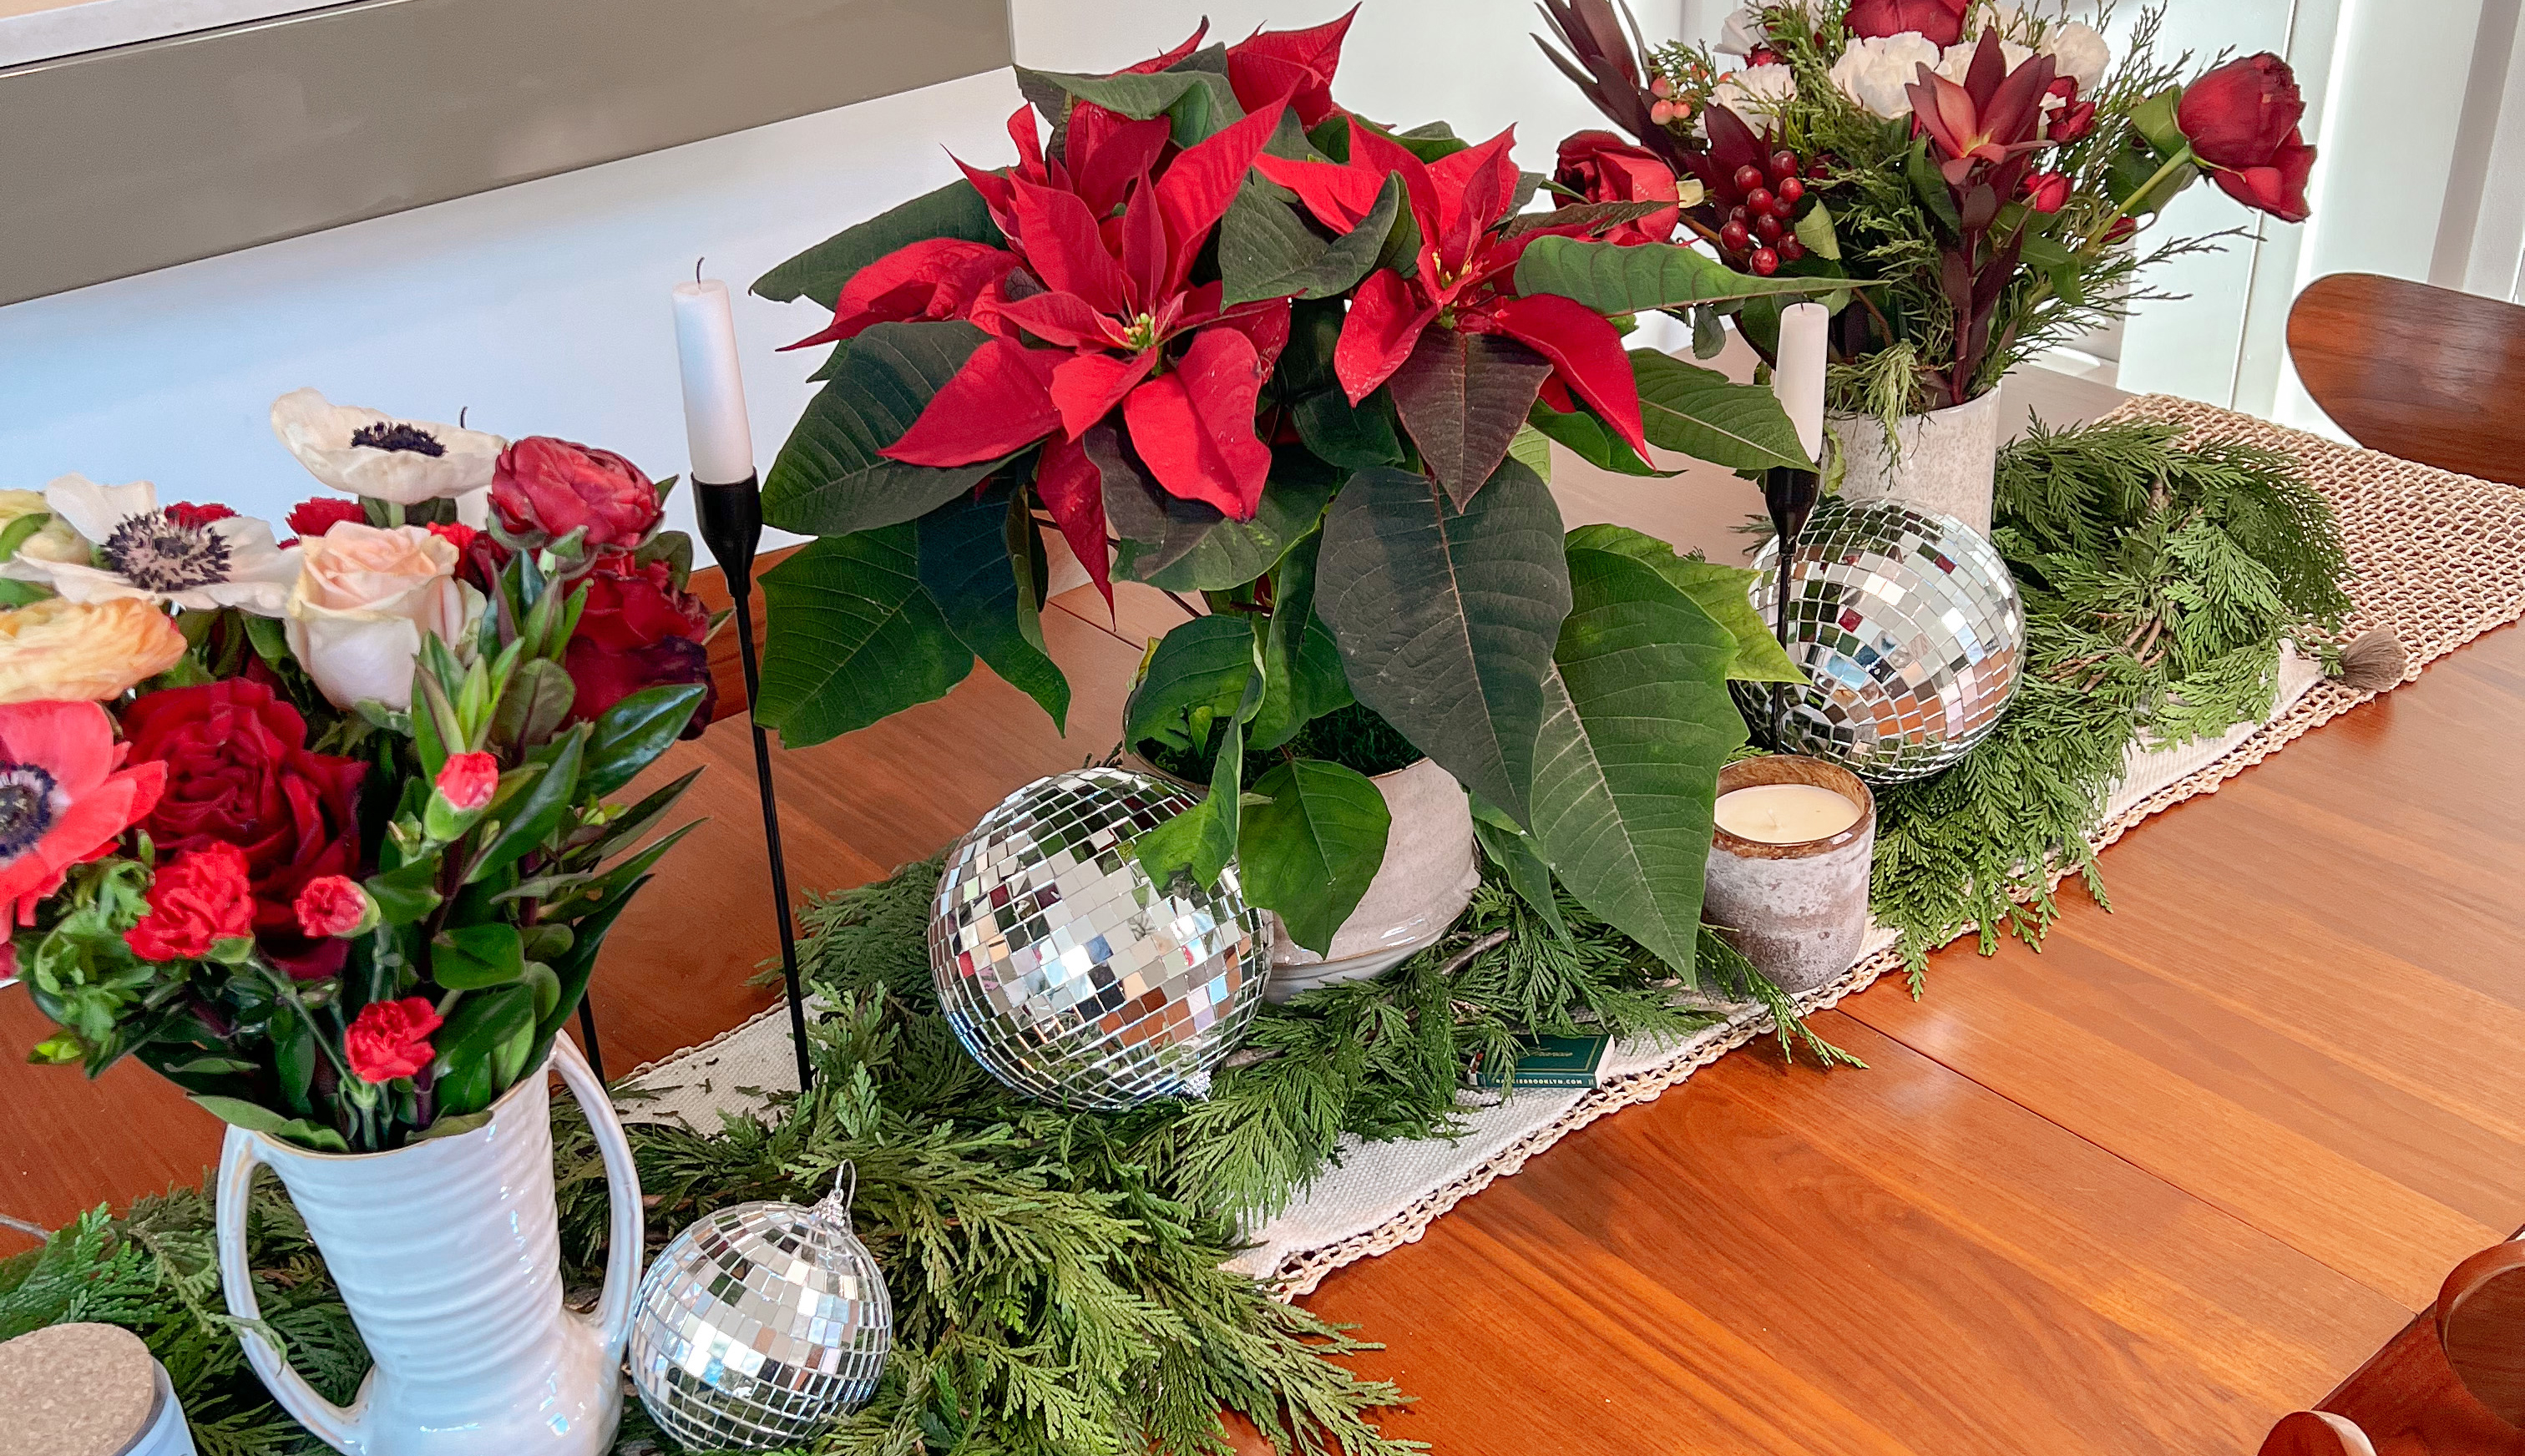 Holiday centerpiece featuring festive floral arrangements